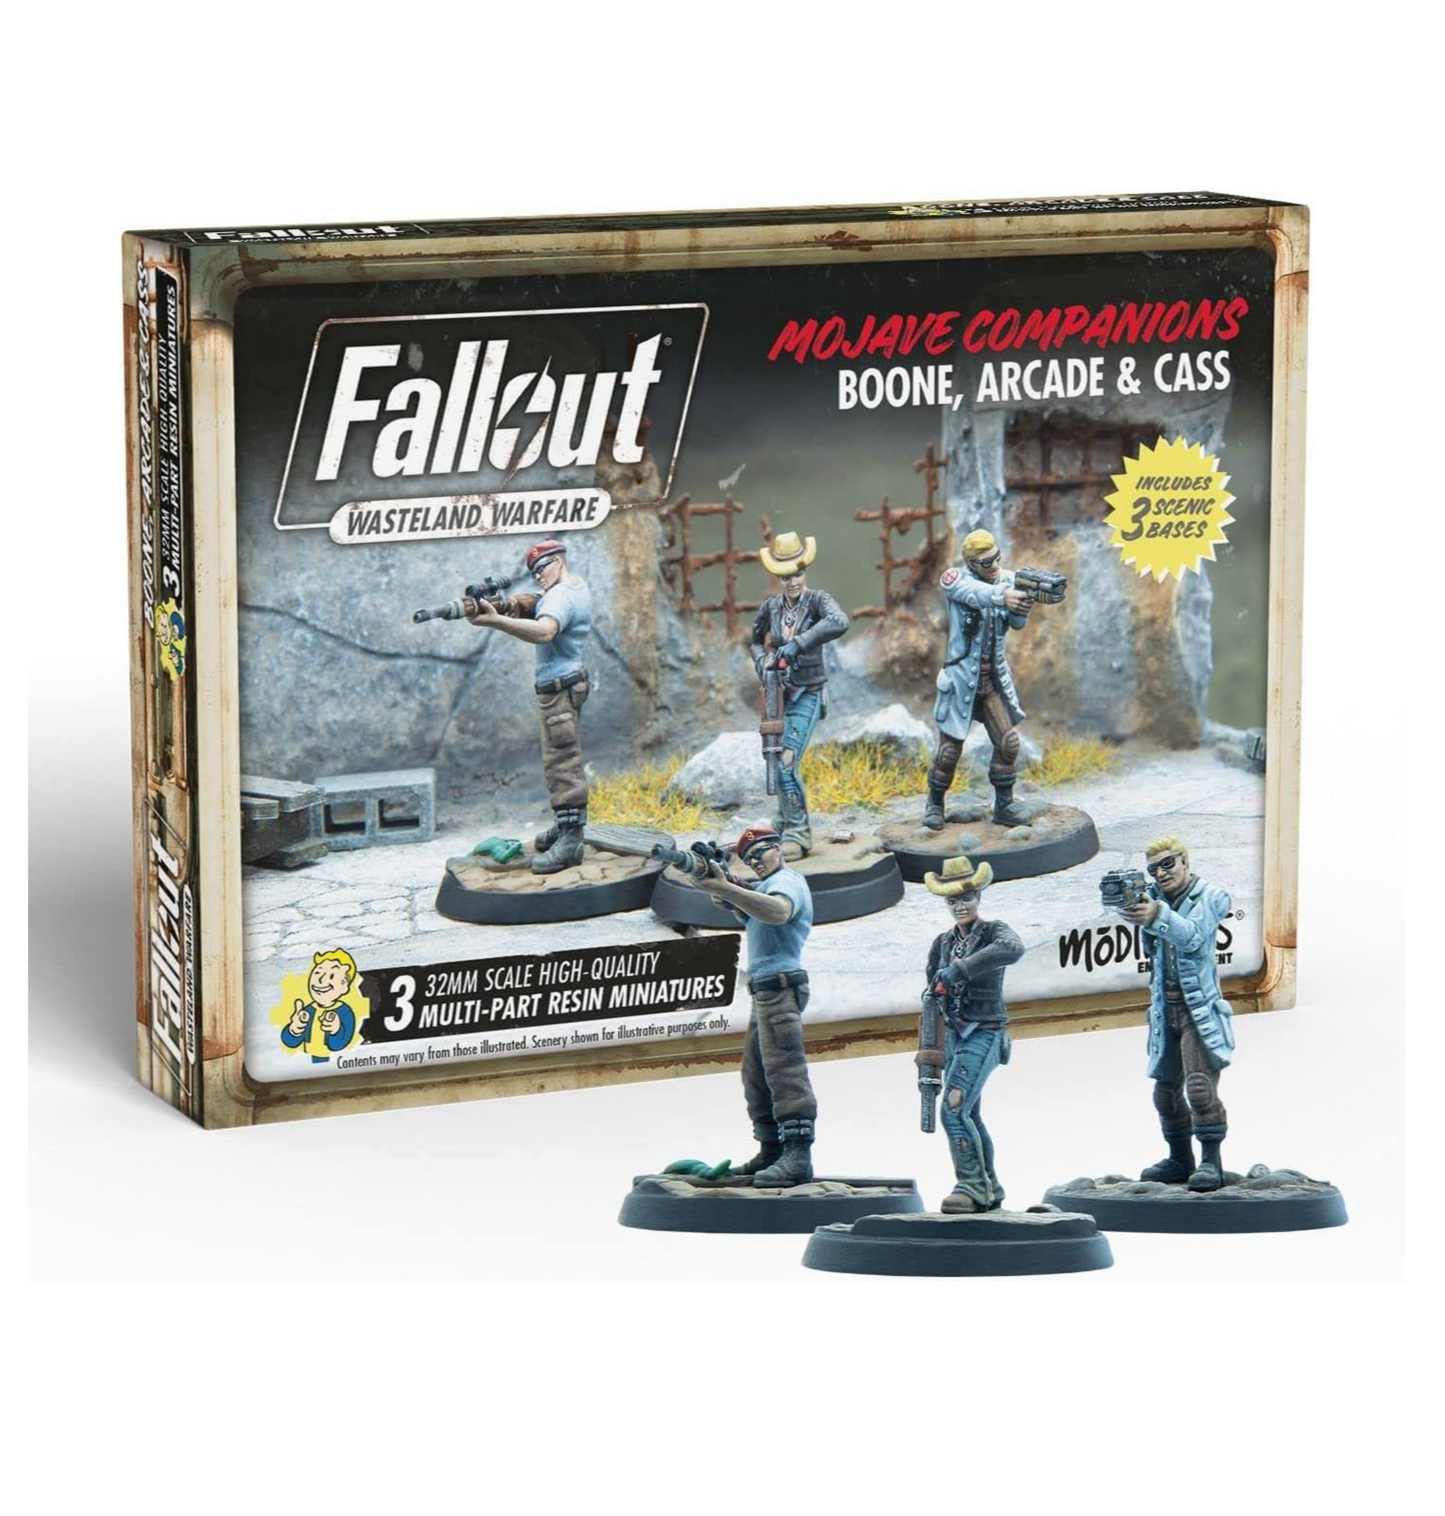 Fallout Wasteland Warfare: Boone, Arcade and Cass